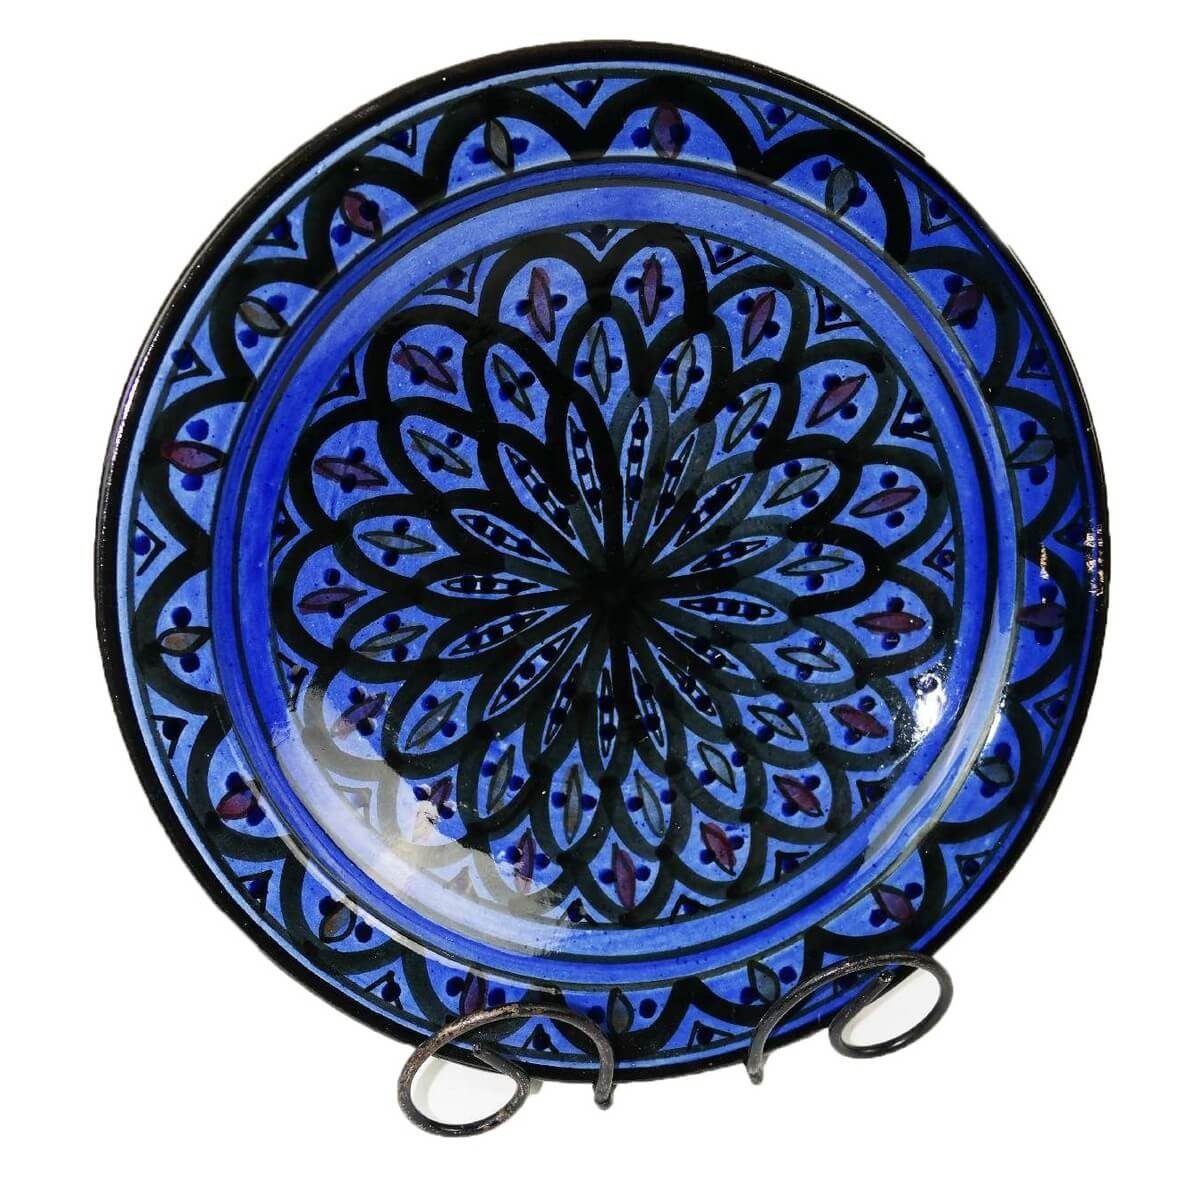 SIMANDRA Handbemahlt Teller mittel, Teller Keramik Blau Orientalischer